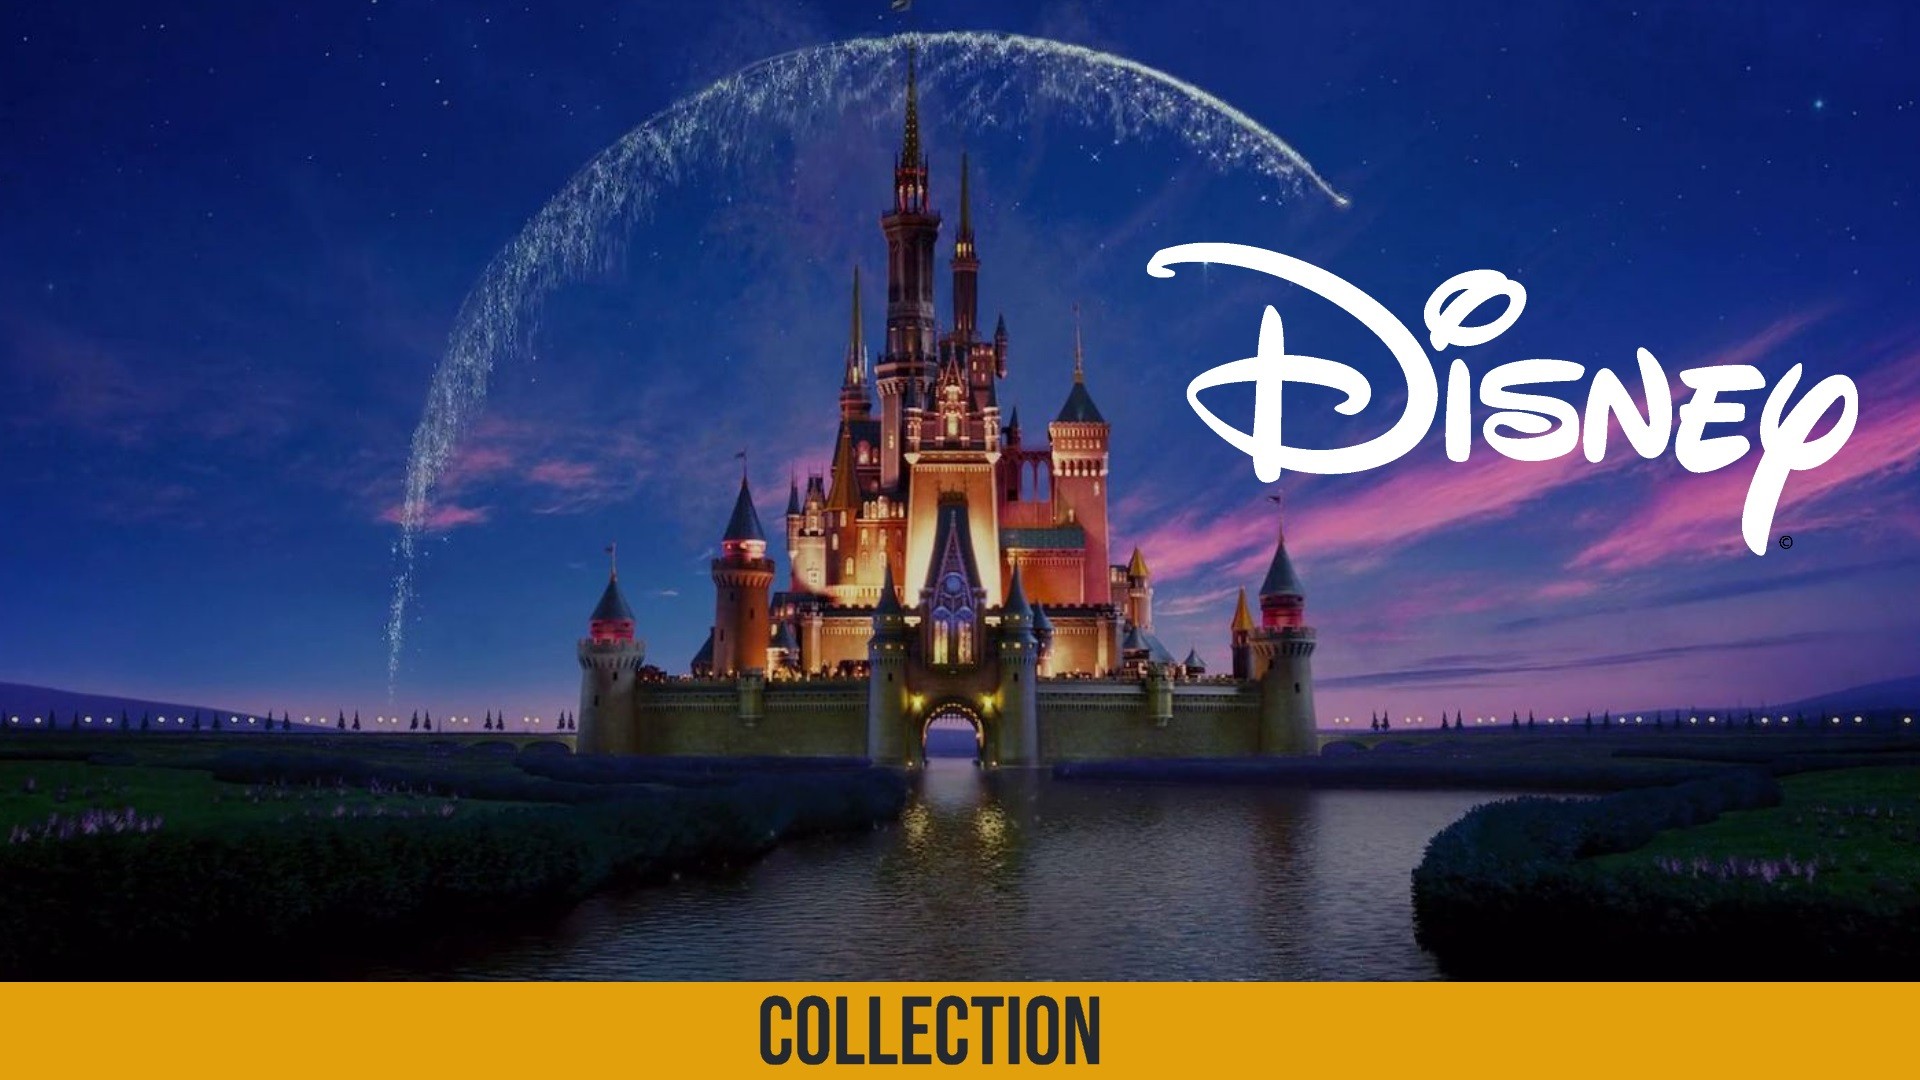 Disney Background Plex Collection Posters